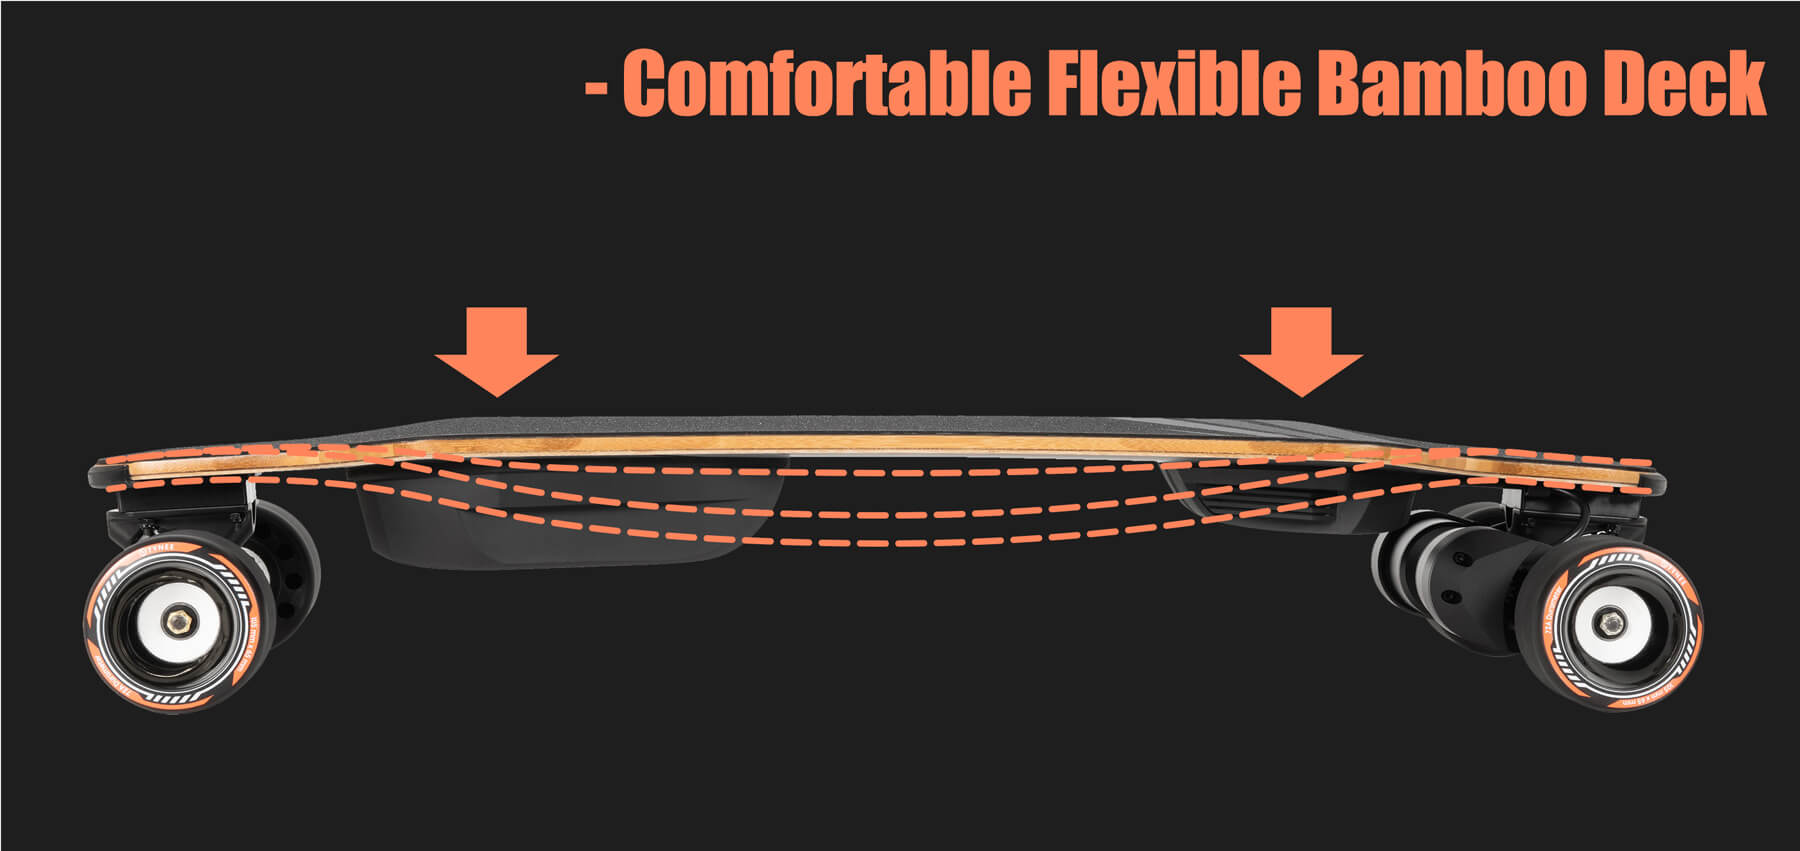 Tynee ultra x pro flexible bamboo deck